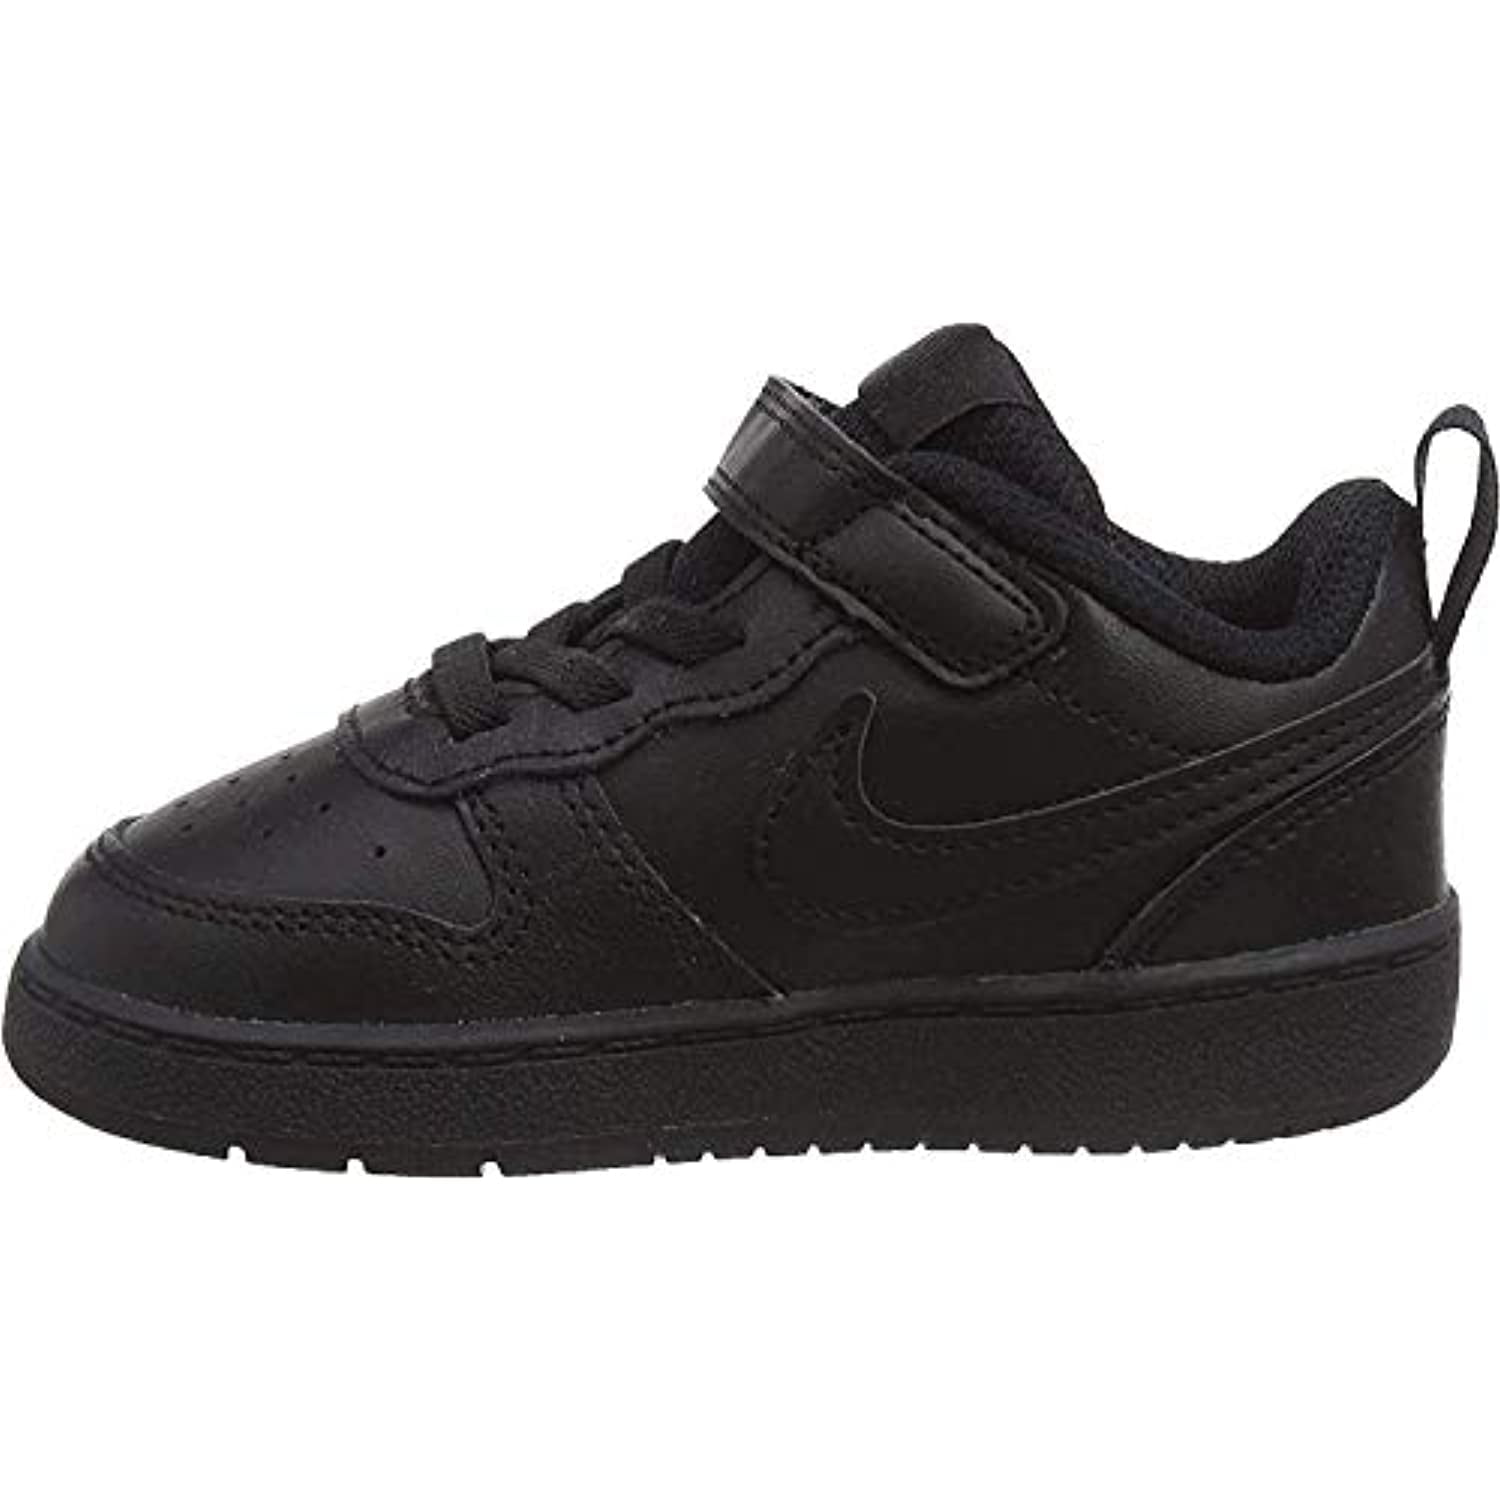 Size 9 Toddler Bq5453-001 Low (TDV) 2 Black/Black/Black Borough Nike Court